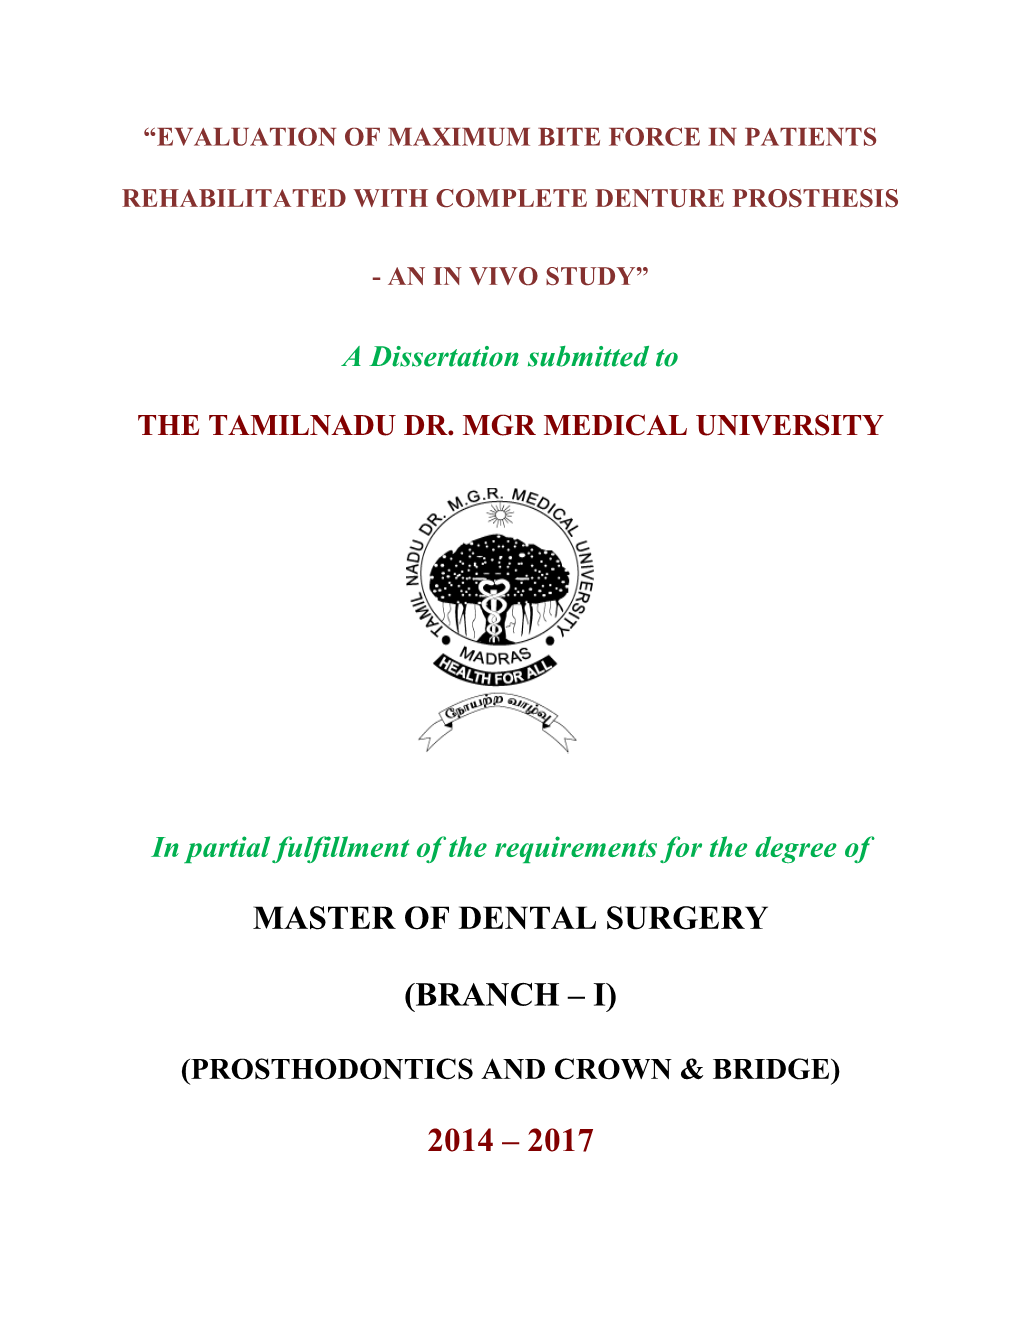 Master of Dental Surgery (Branch – I) 2014 – 2017